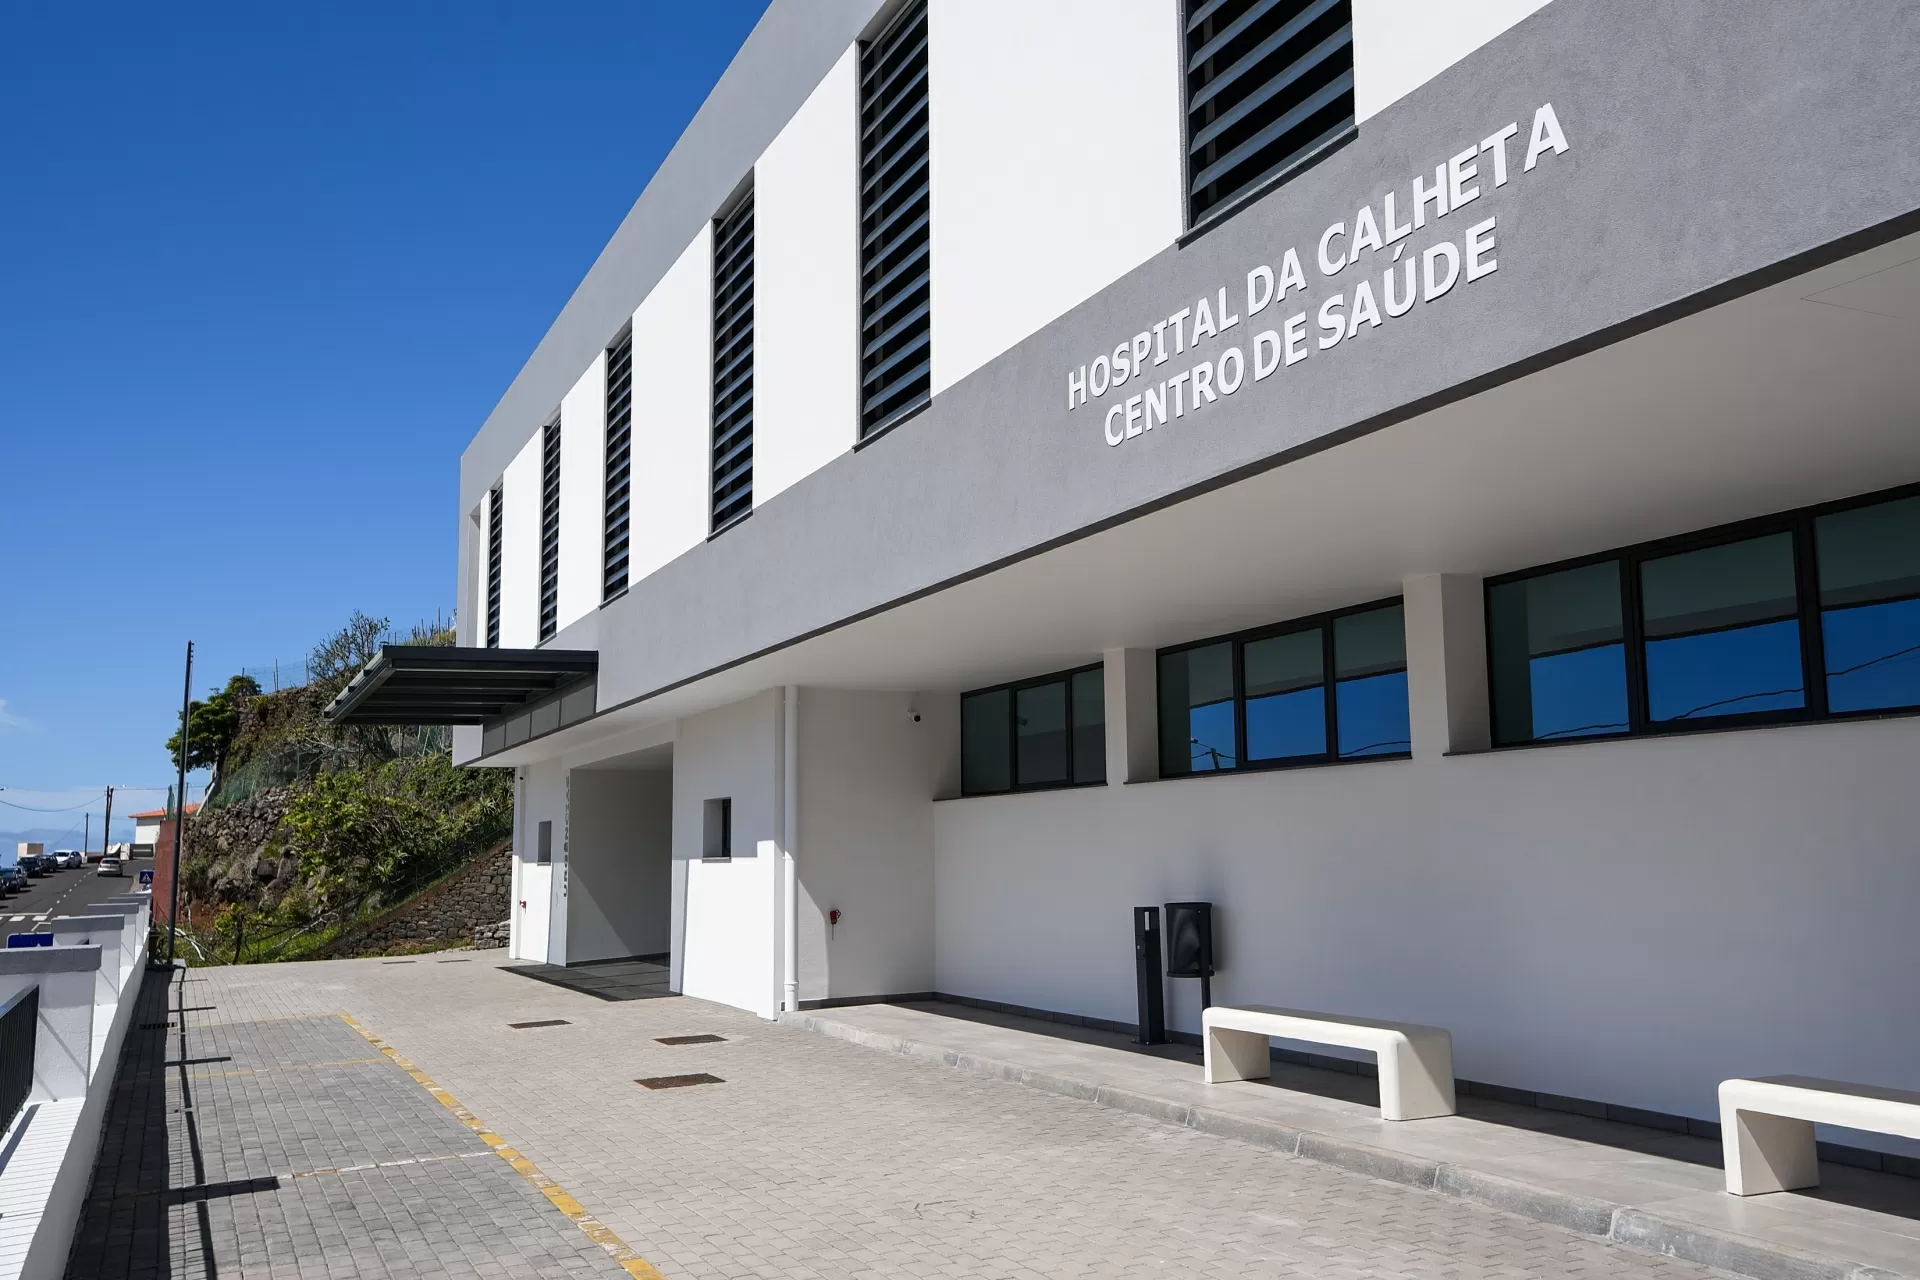 Centro de saúde da Calheta 